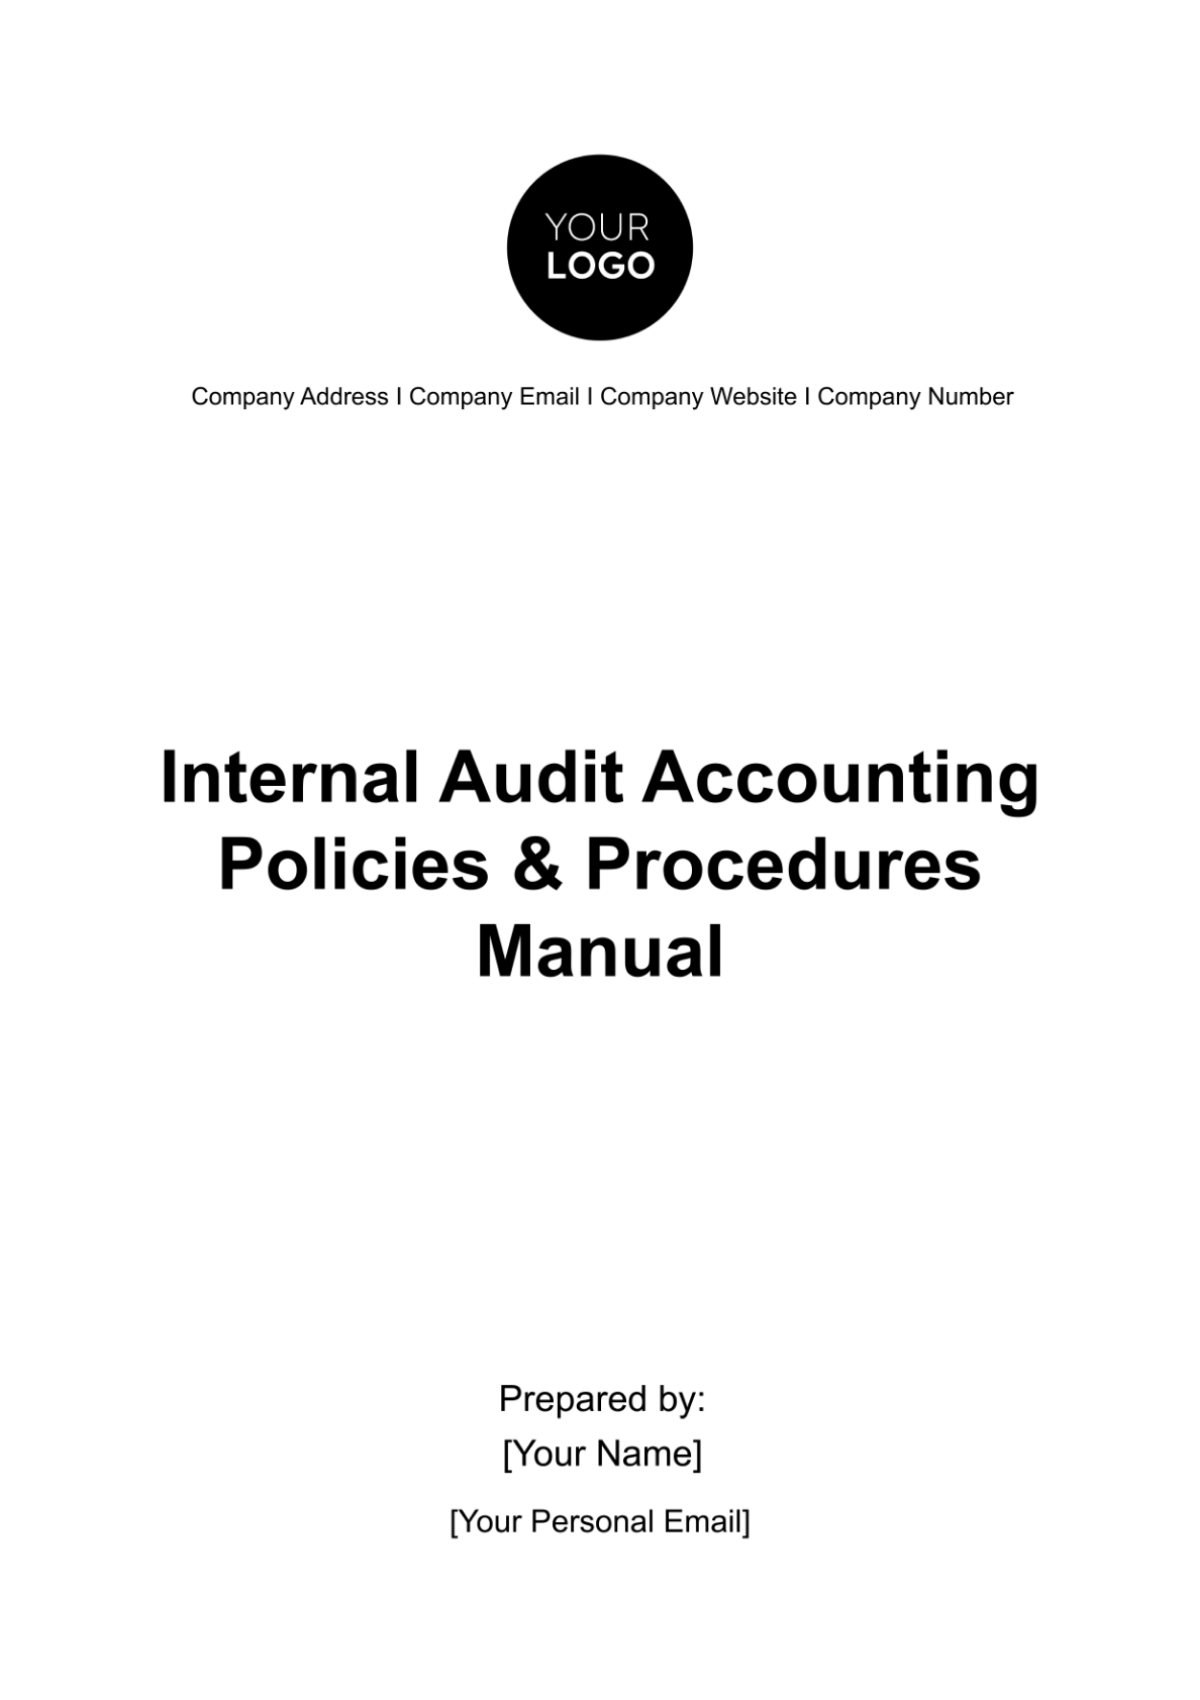 Free Internal Audit Accounting Policies & Procedures Manual Template